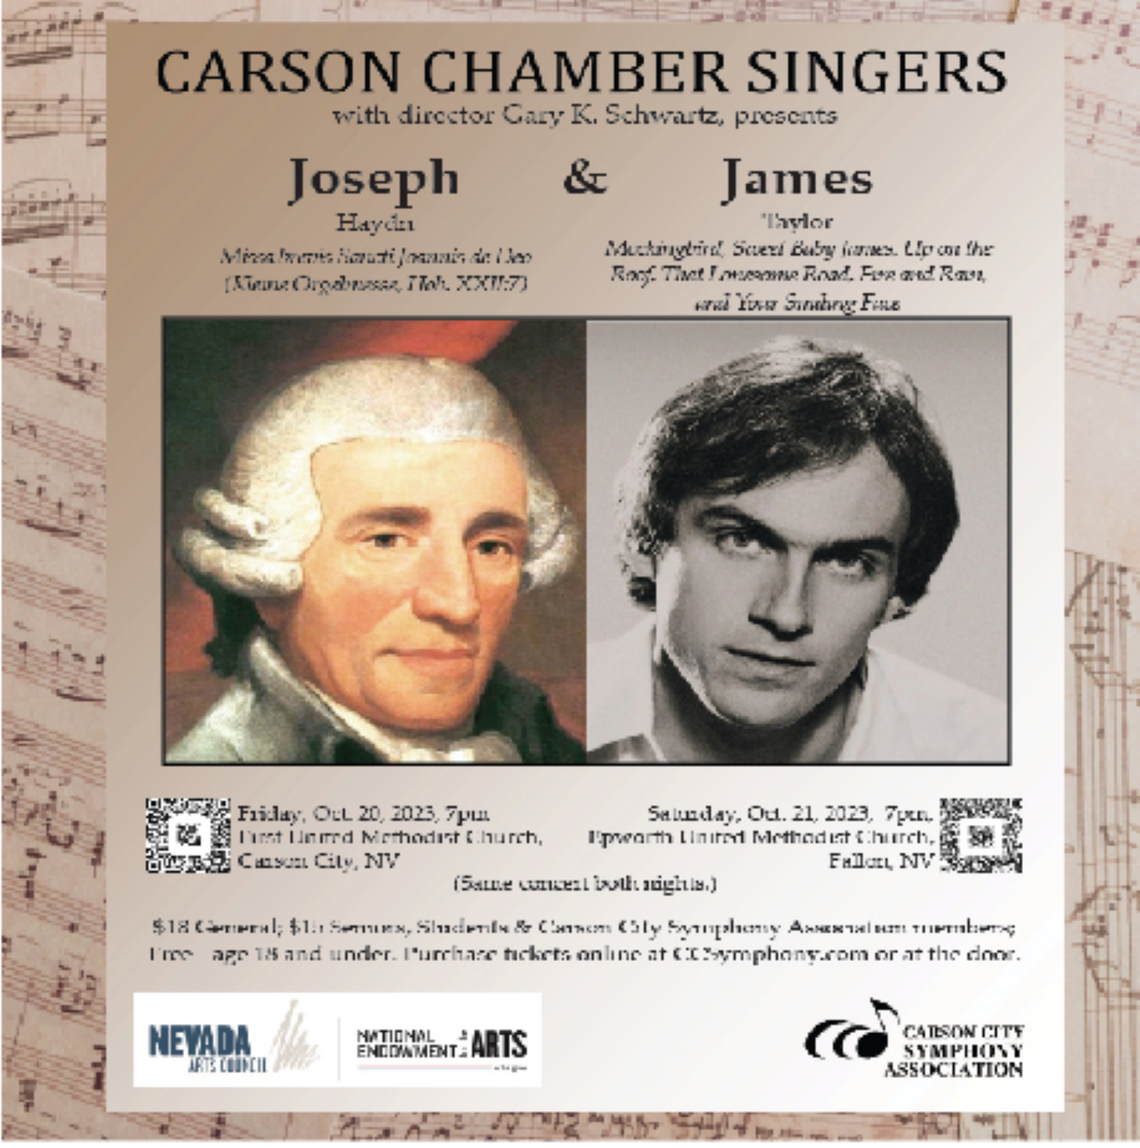 Carson Chamber Singers Present Joseph & James  AKA Haydn & Taylor